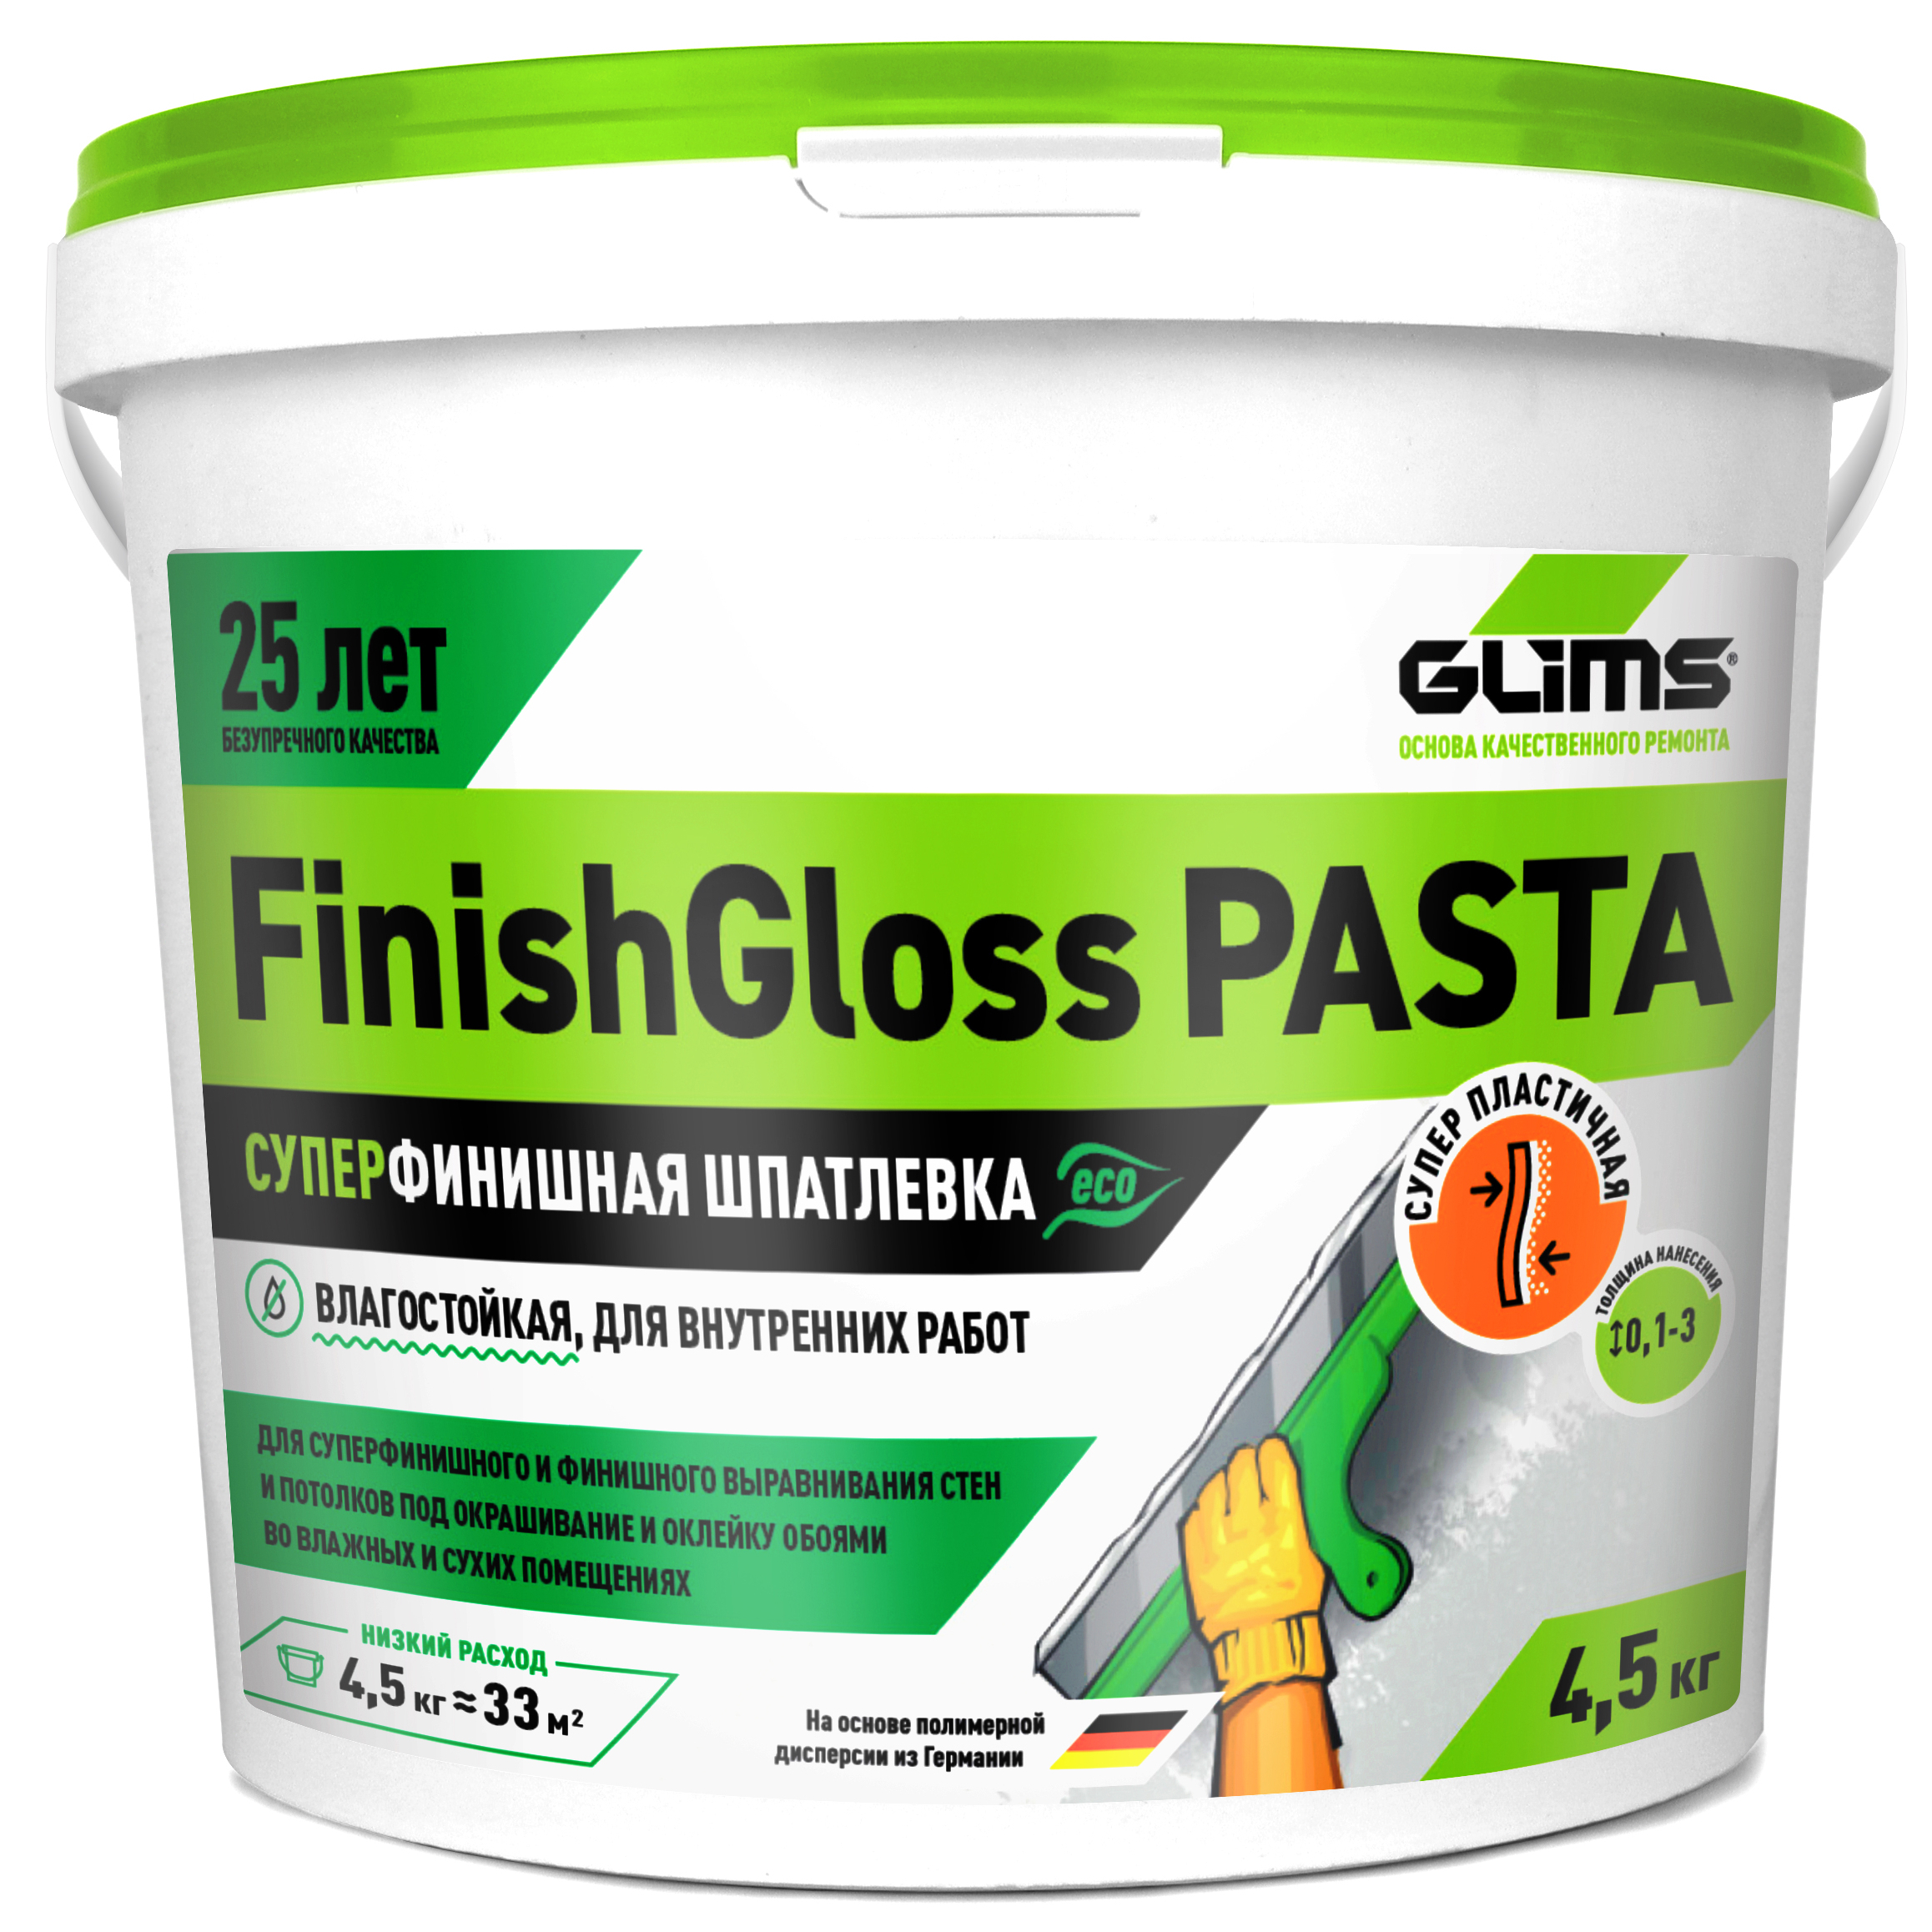 89887396 Шпаклевка суперфинишная полимерная Finish Gloss pasta 4.5 кг нет STLM-0080113 GLIMS